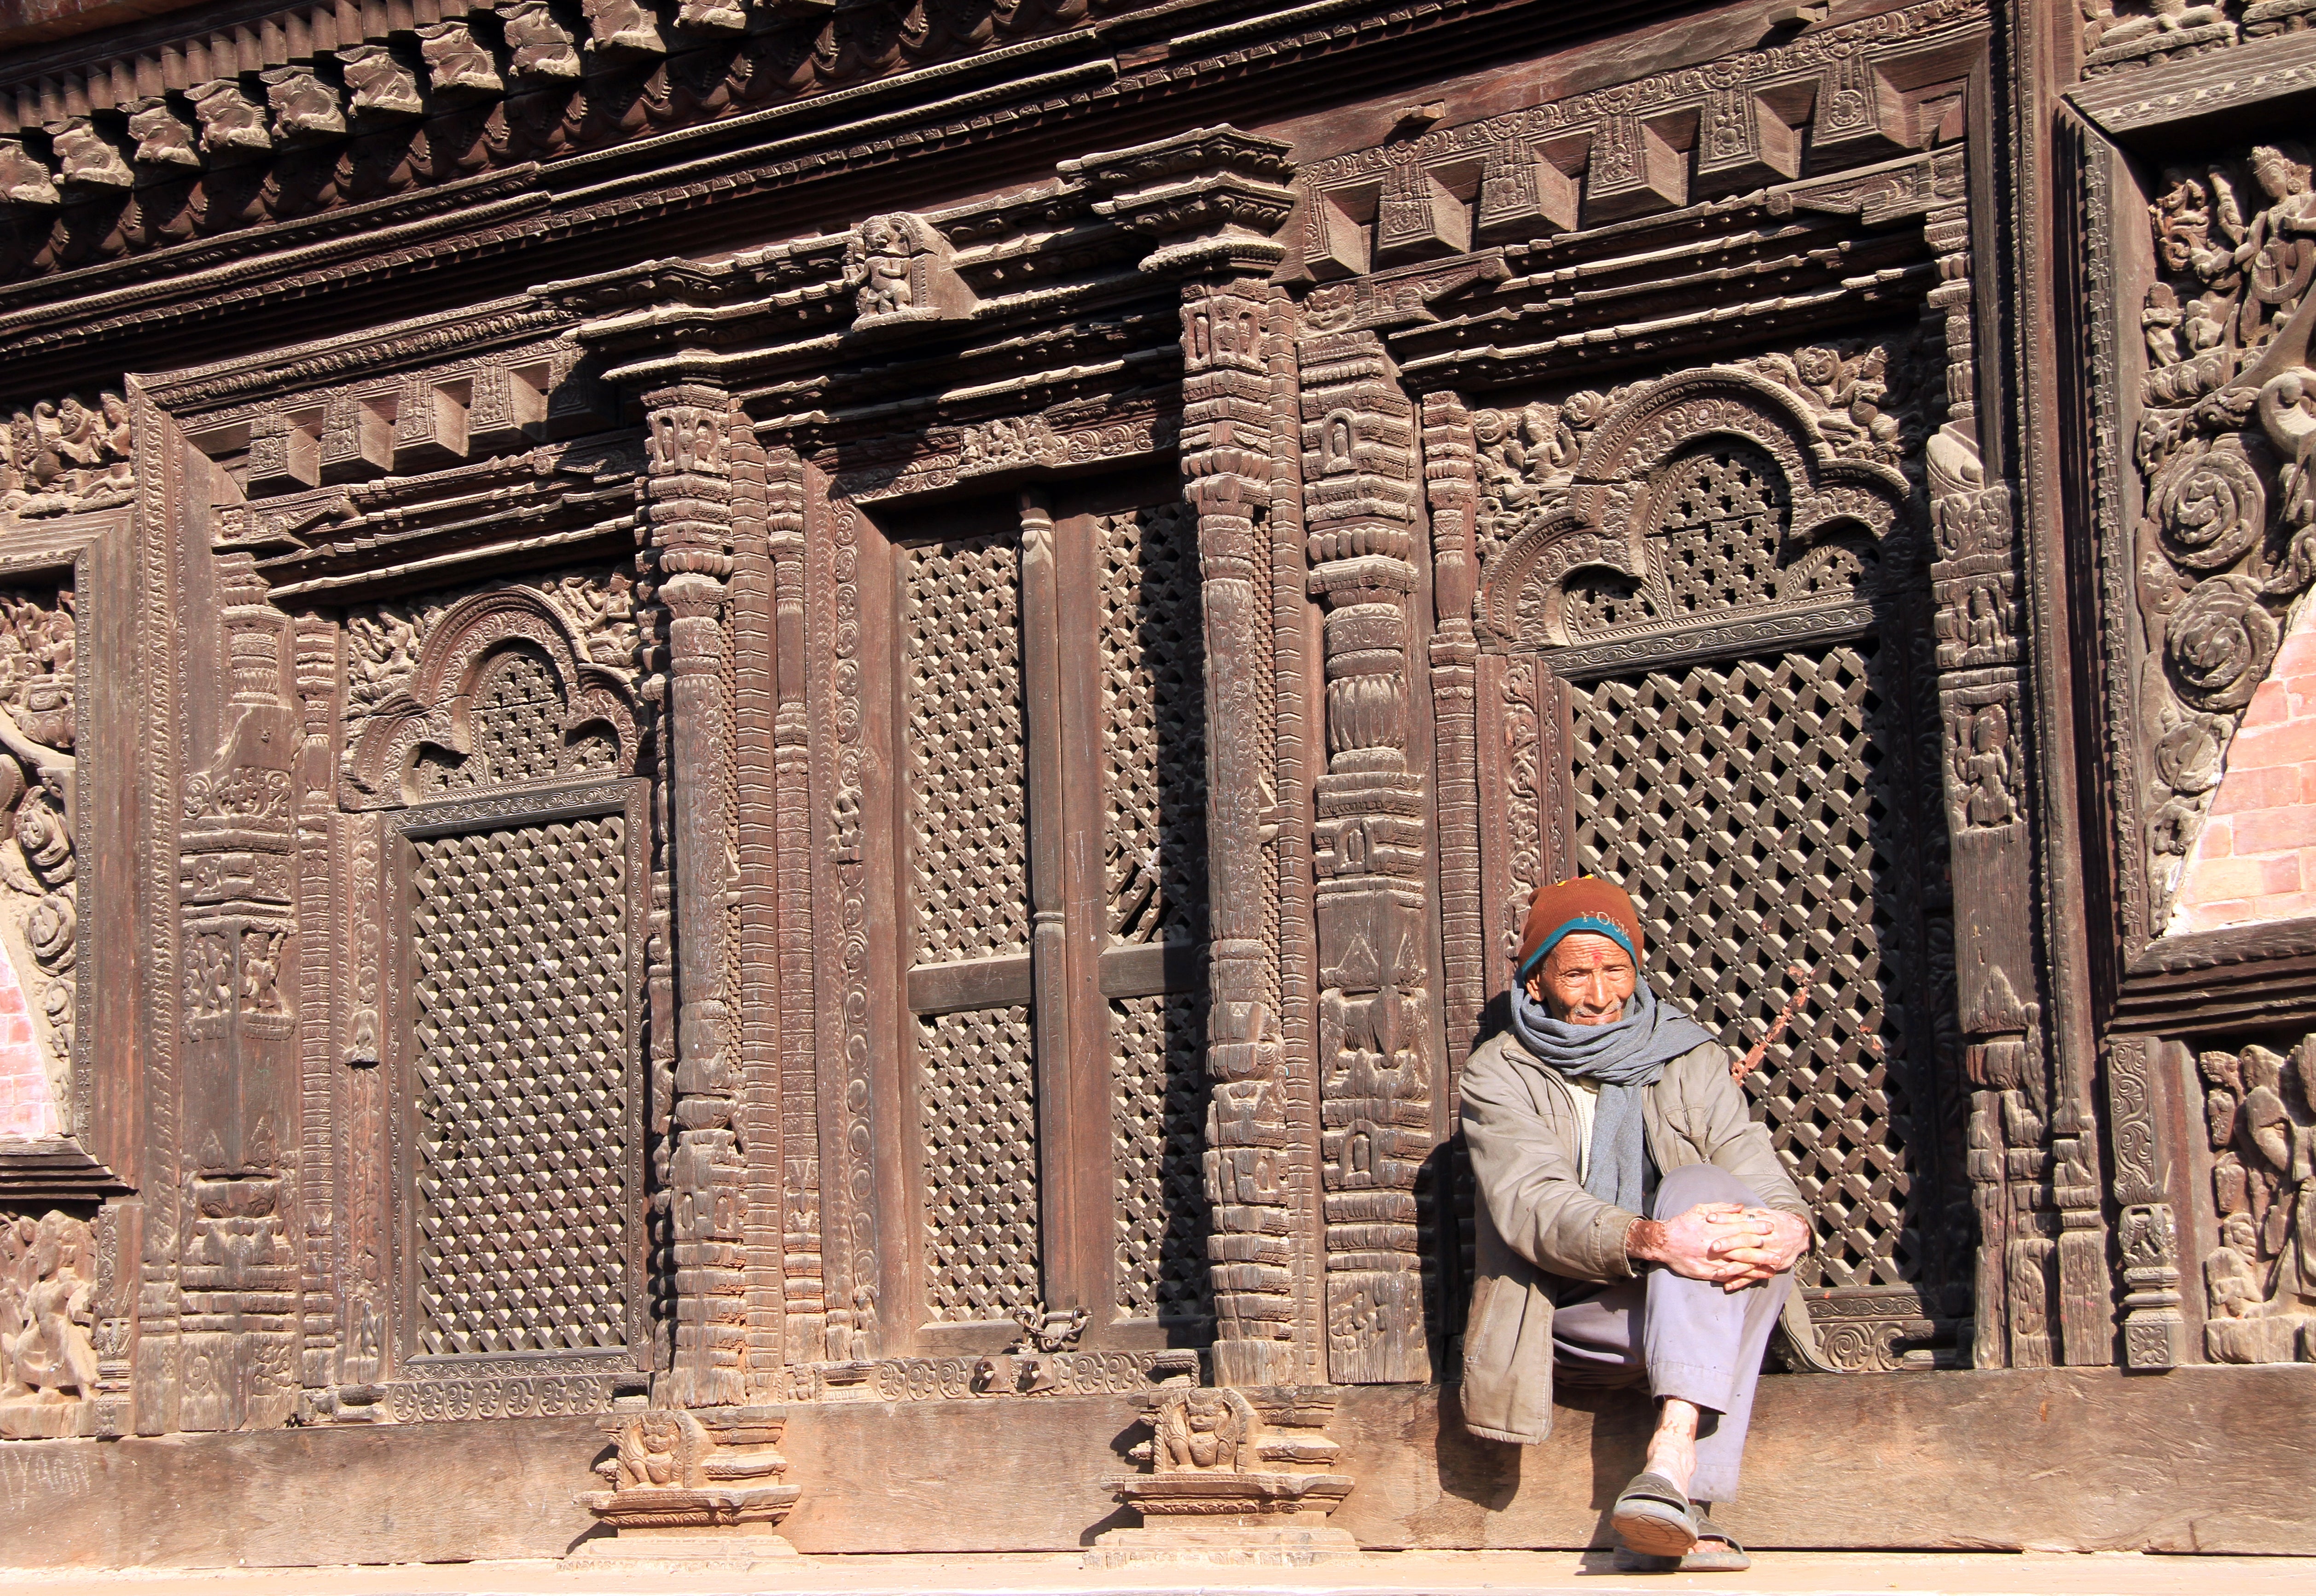 Intricate wood carvings decorate Newari architecture in Durbar Square, Bhaktapur